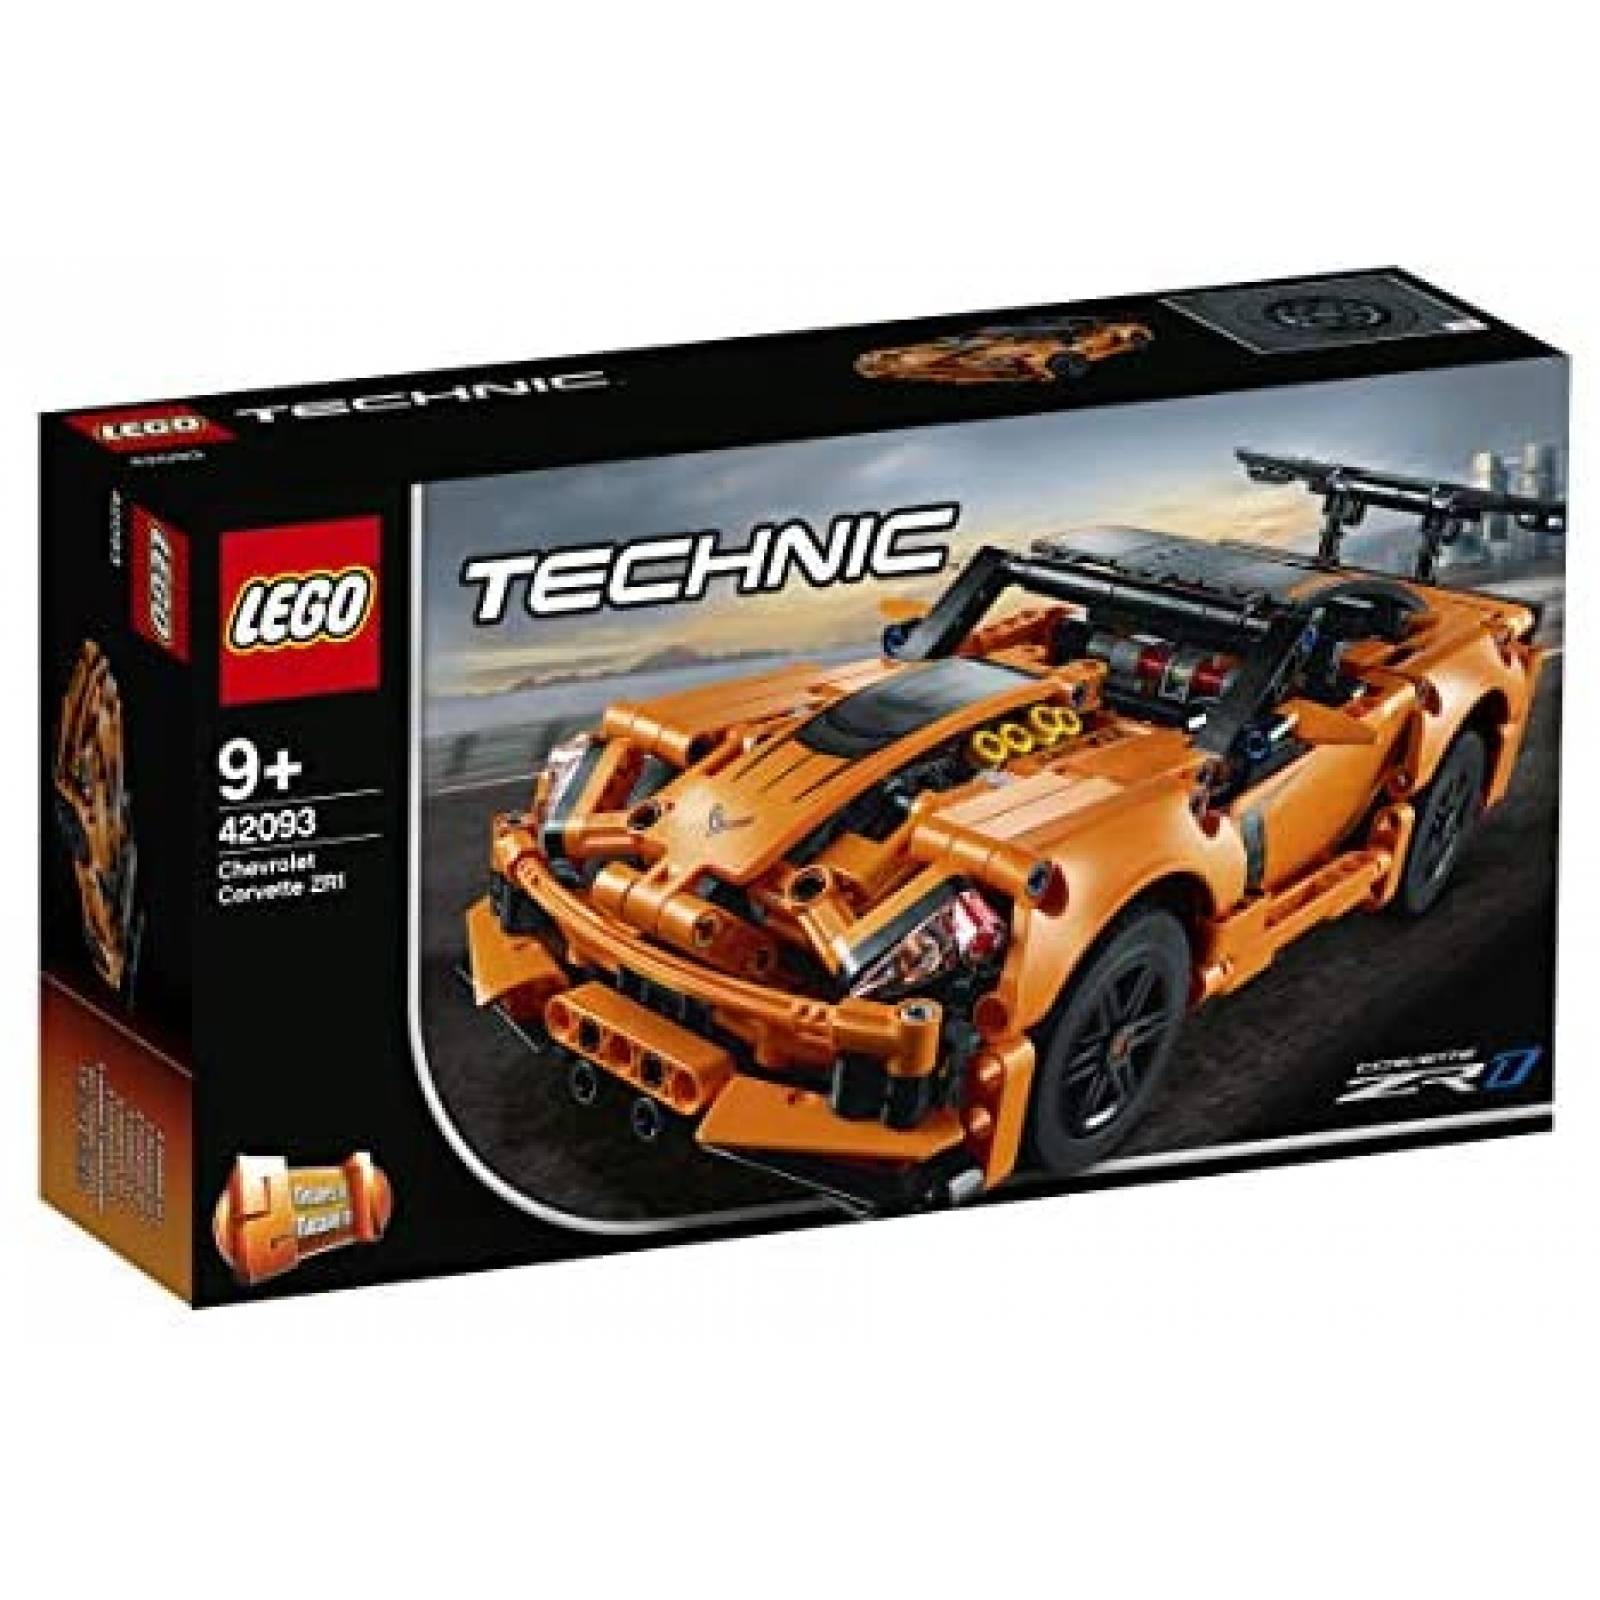 Set de Construcción LEGO Technic Chevrolet Corvette 579 Pzs